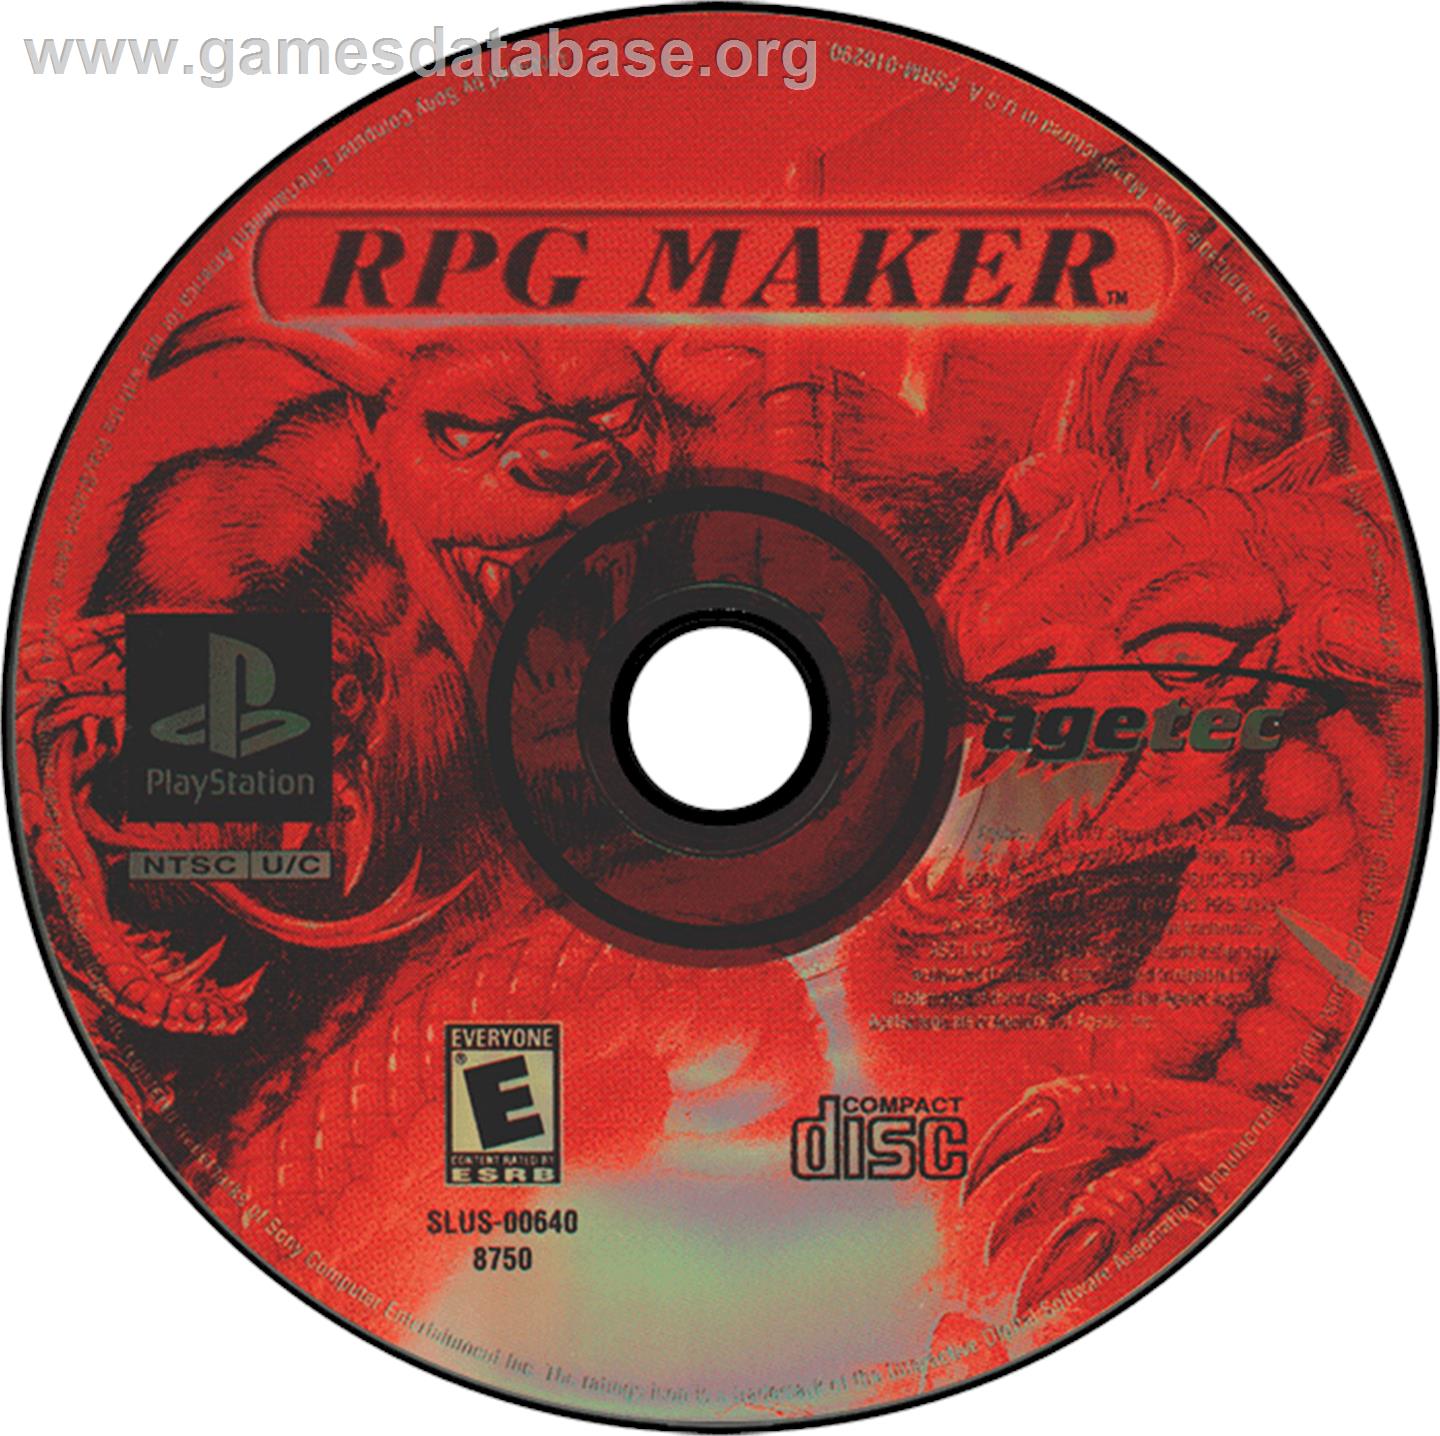 RPG Maker - Sony Playstation - Artwork - Disc